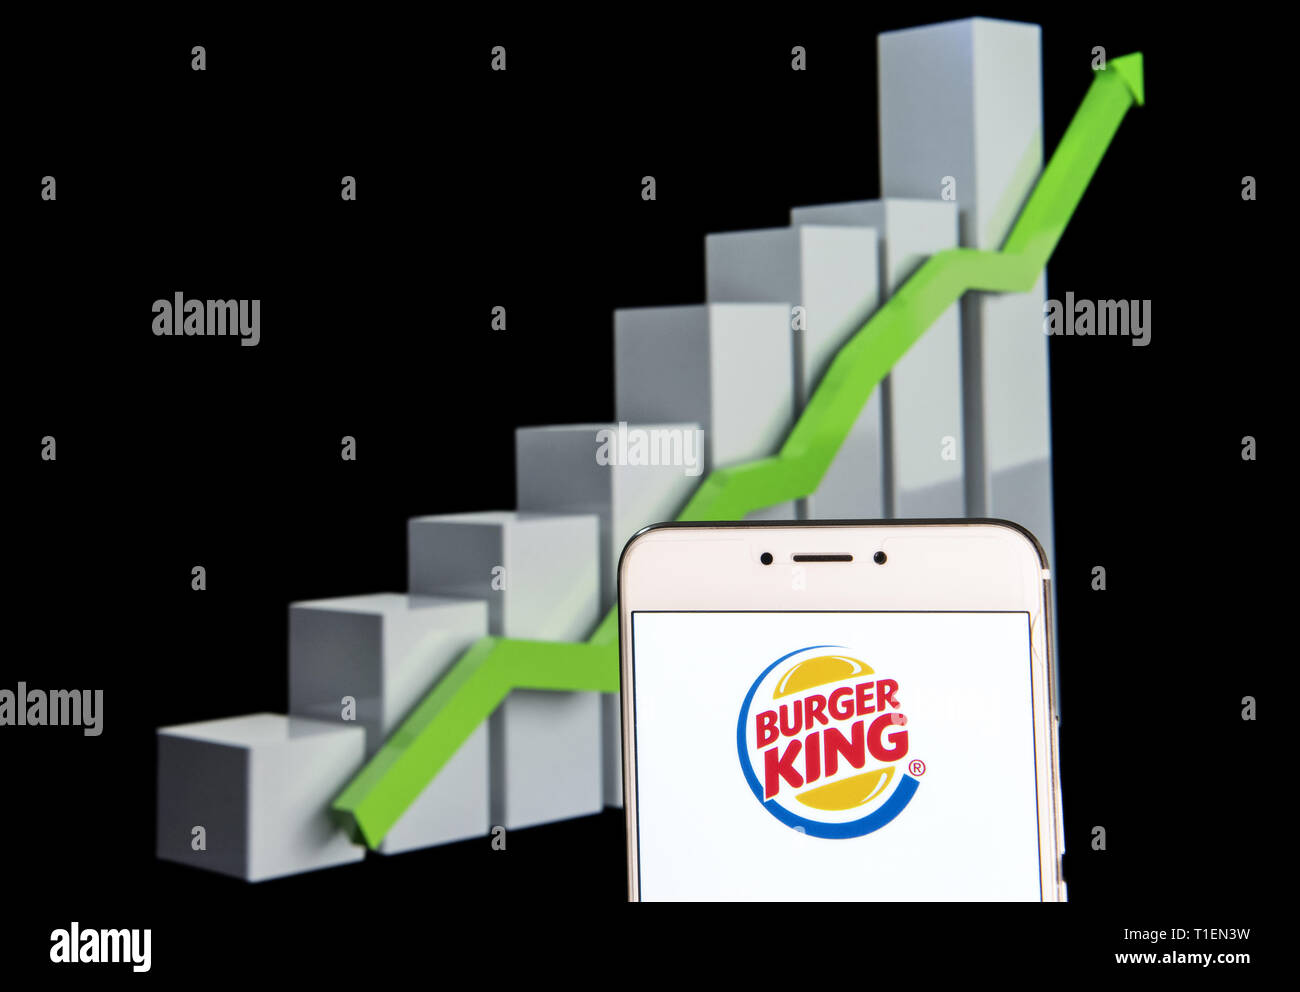 Burger King Stock Chart 2019